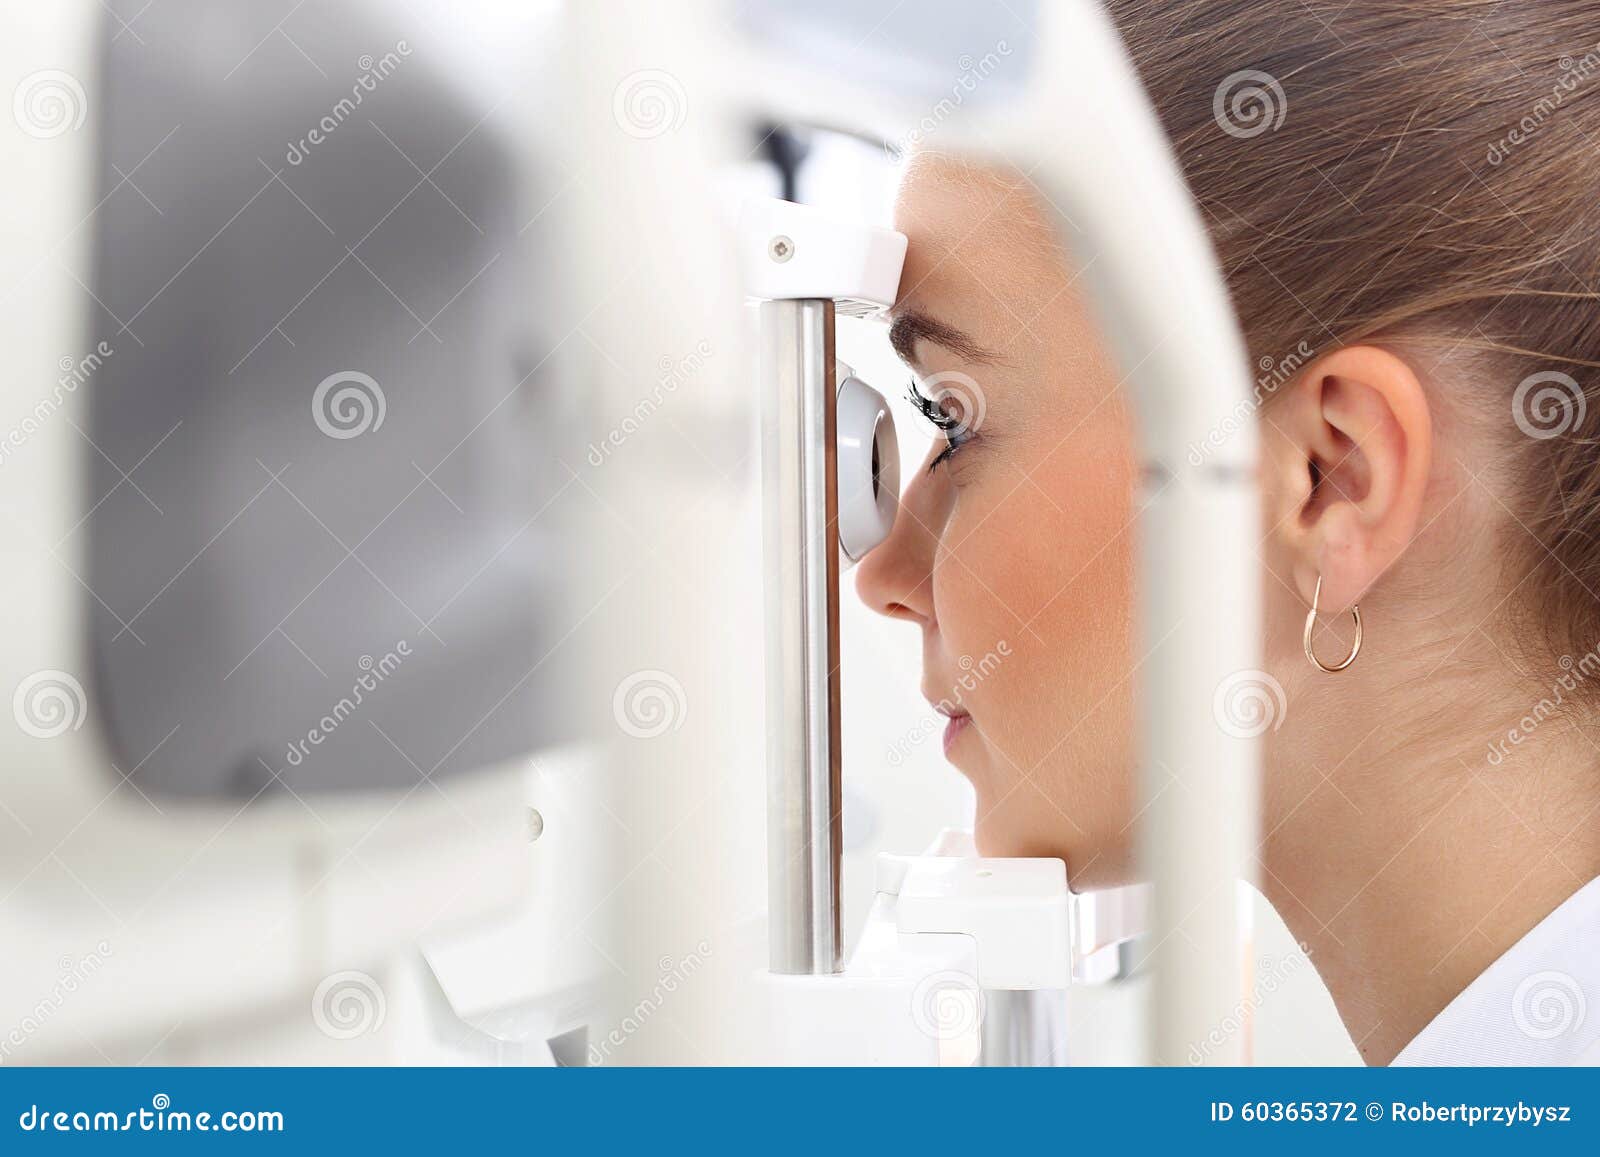 eye examination.